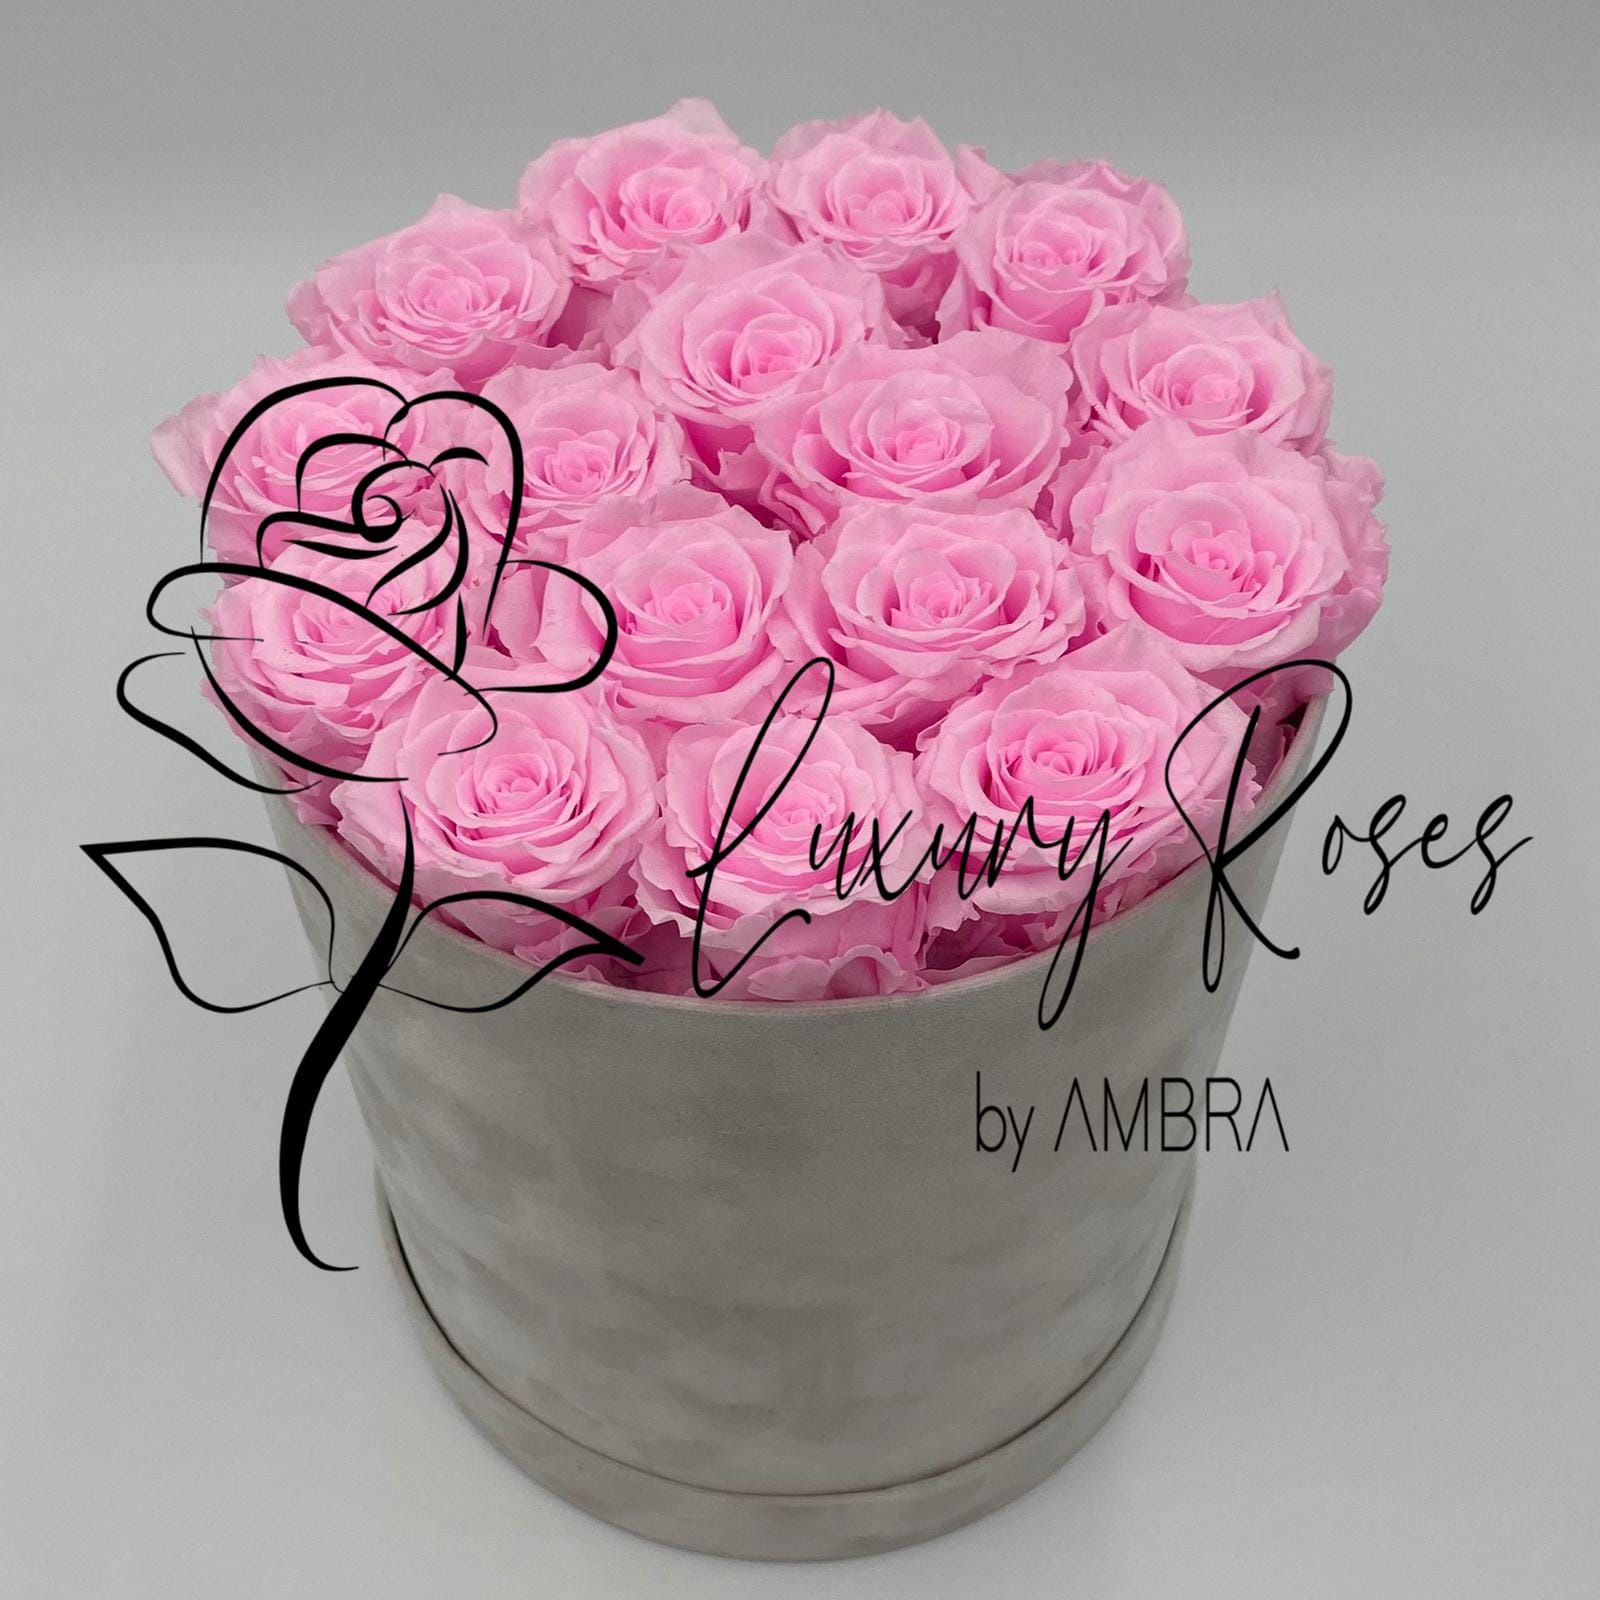 Mother’s Day Eternal Box light pink Roses Velvet Gift Real Preserved Flowers Bouquet Bucket Anniversary Birthday Present Handmade immortal Gift   